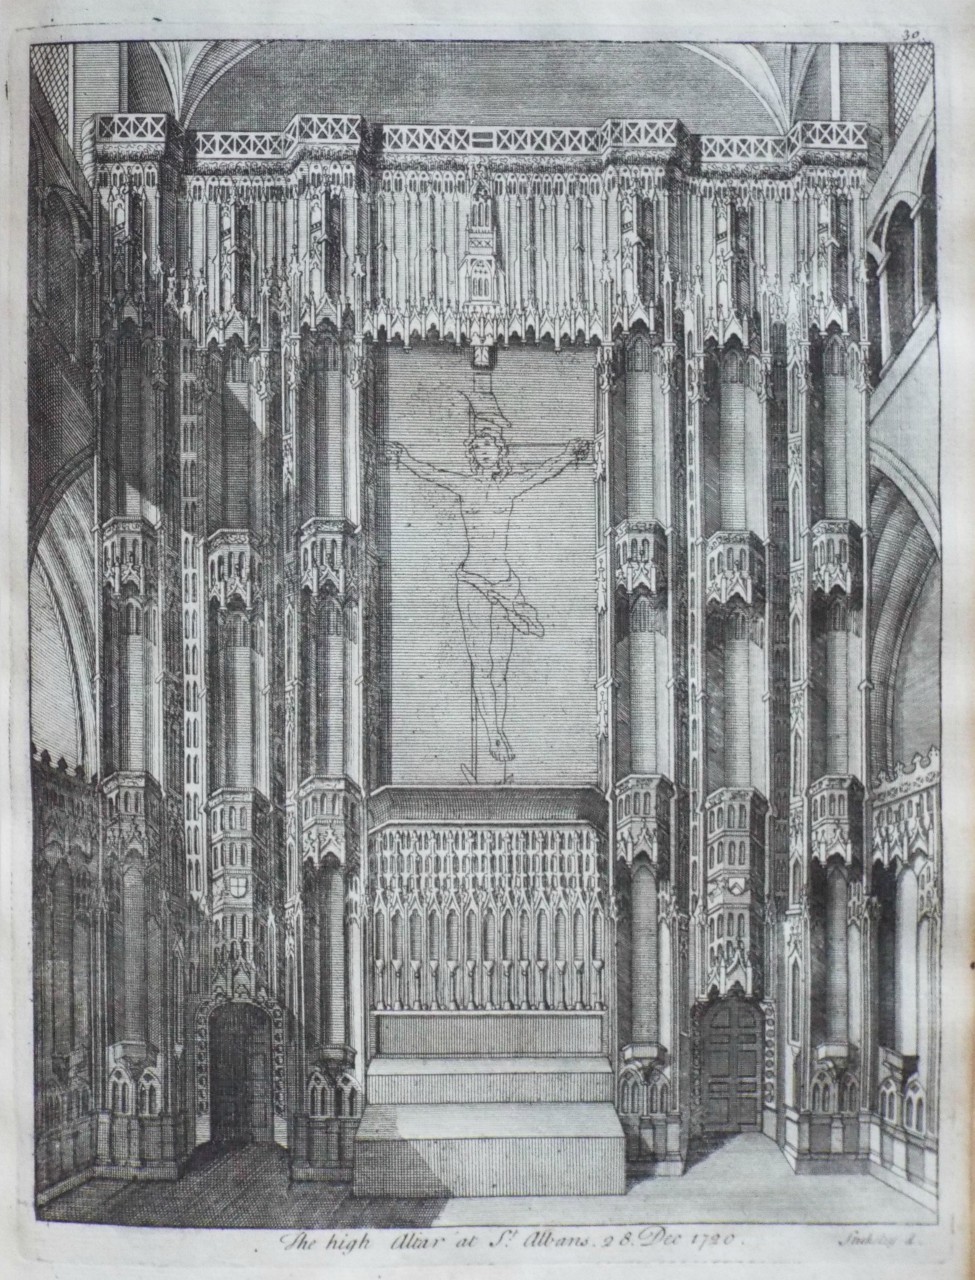 Print - The High Altar at St. Albans. 28. Dec 1720.